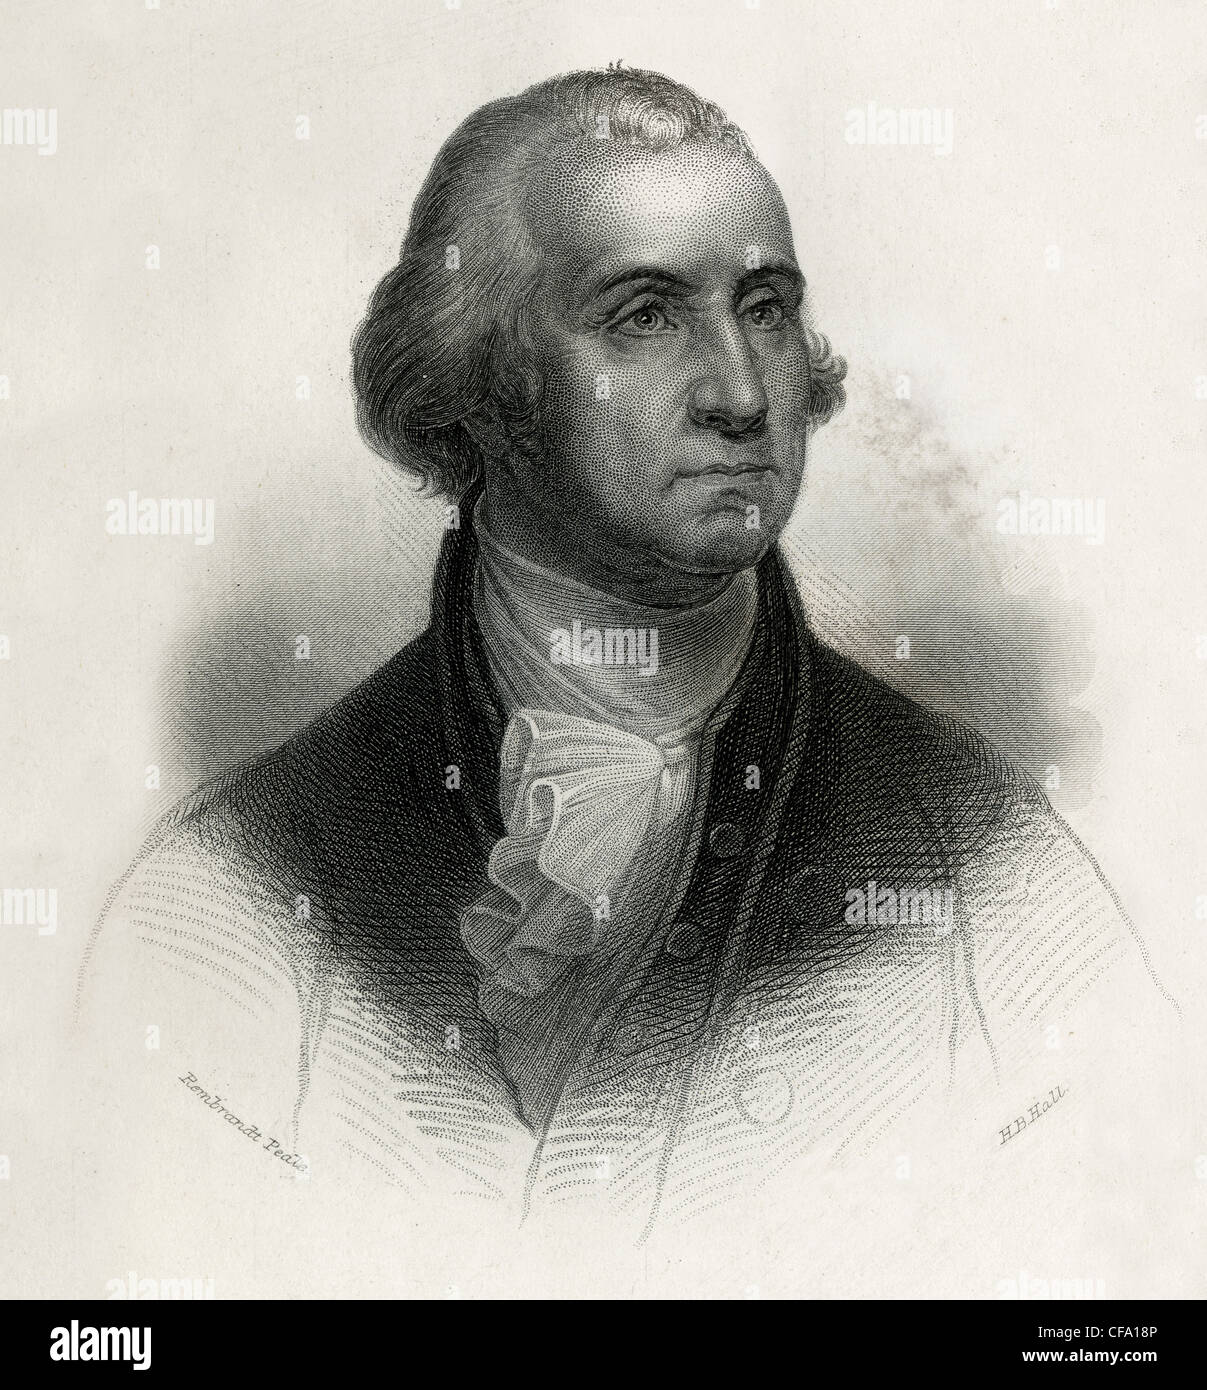 1860-Gravur von George Washington. Stockfoto